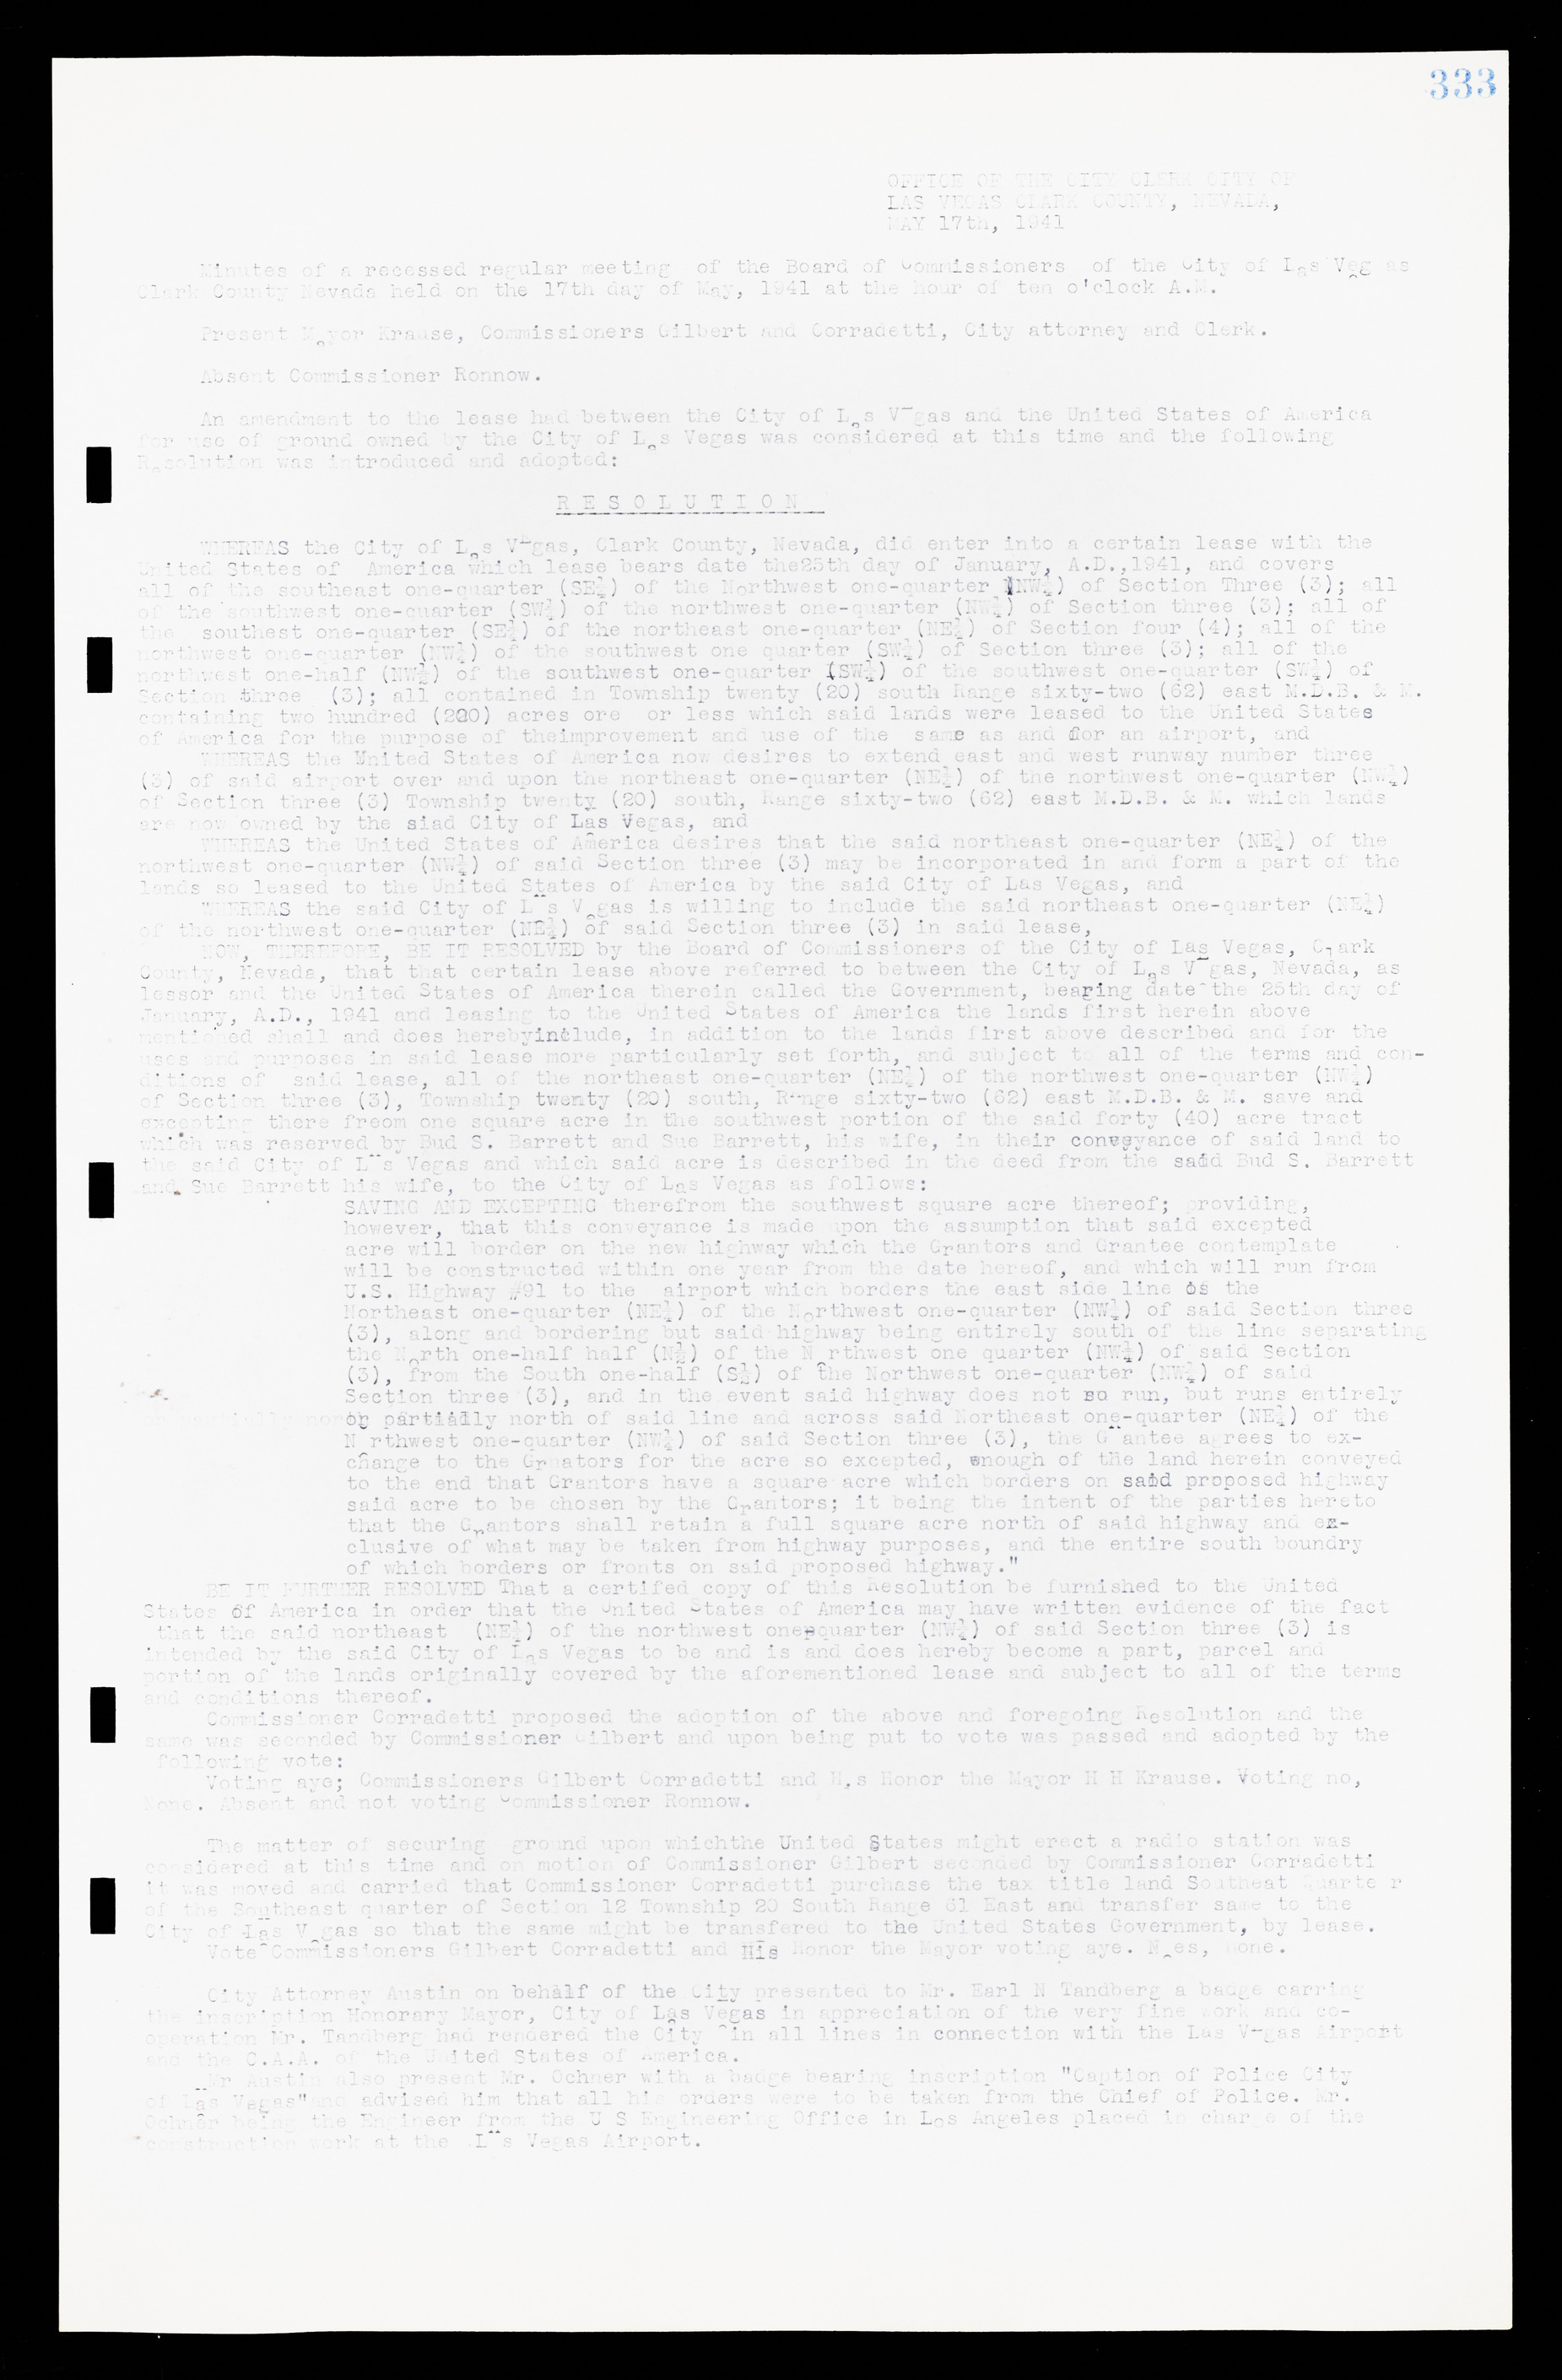 Las Vegas City Commission Minutes, February 17, 1937 to August 4, 1942, lvc000004-357